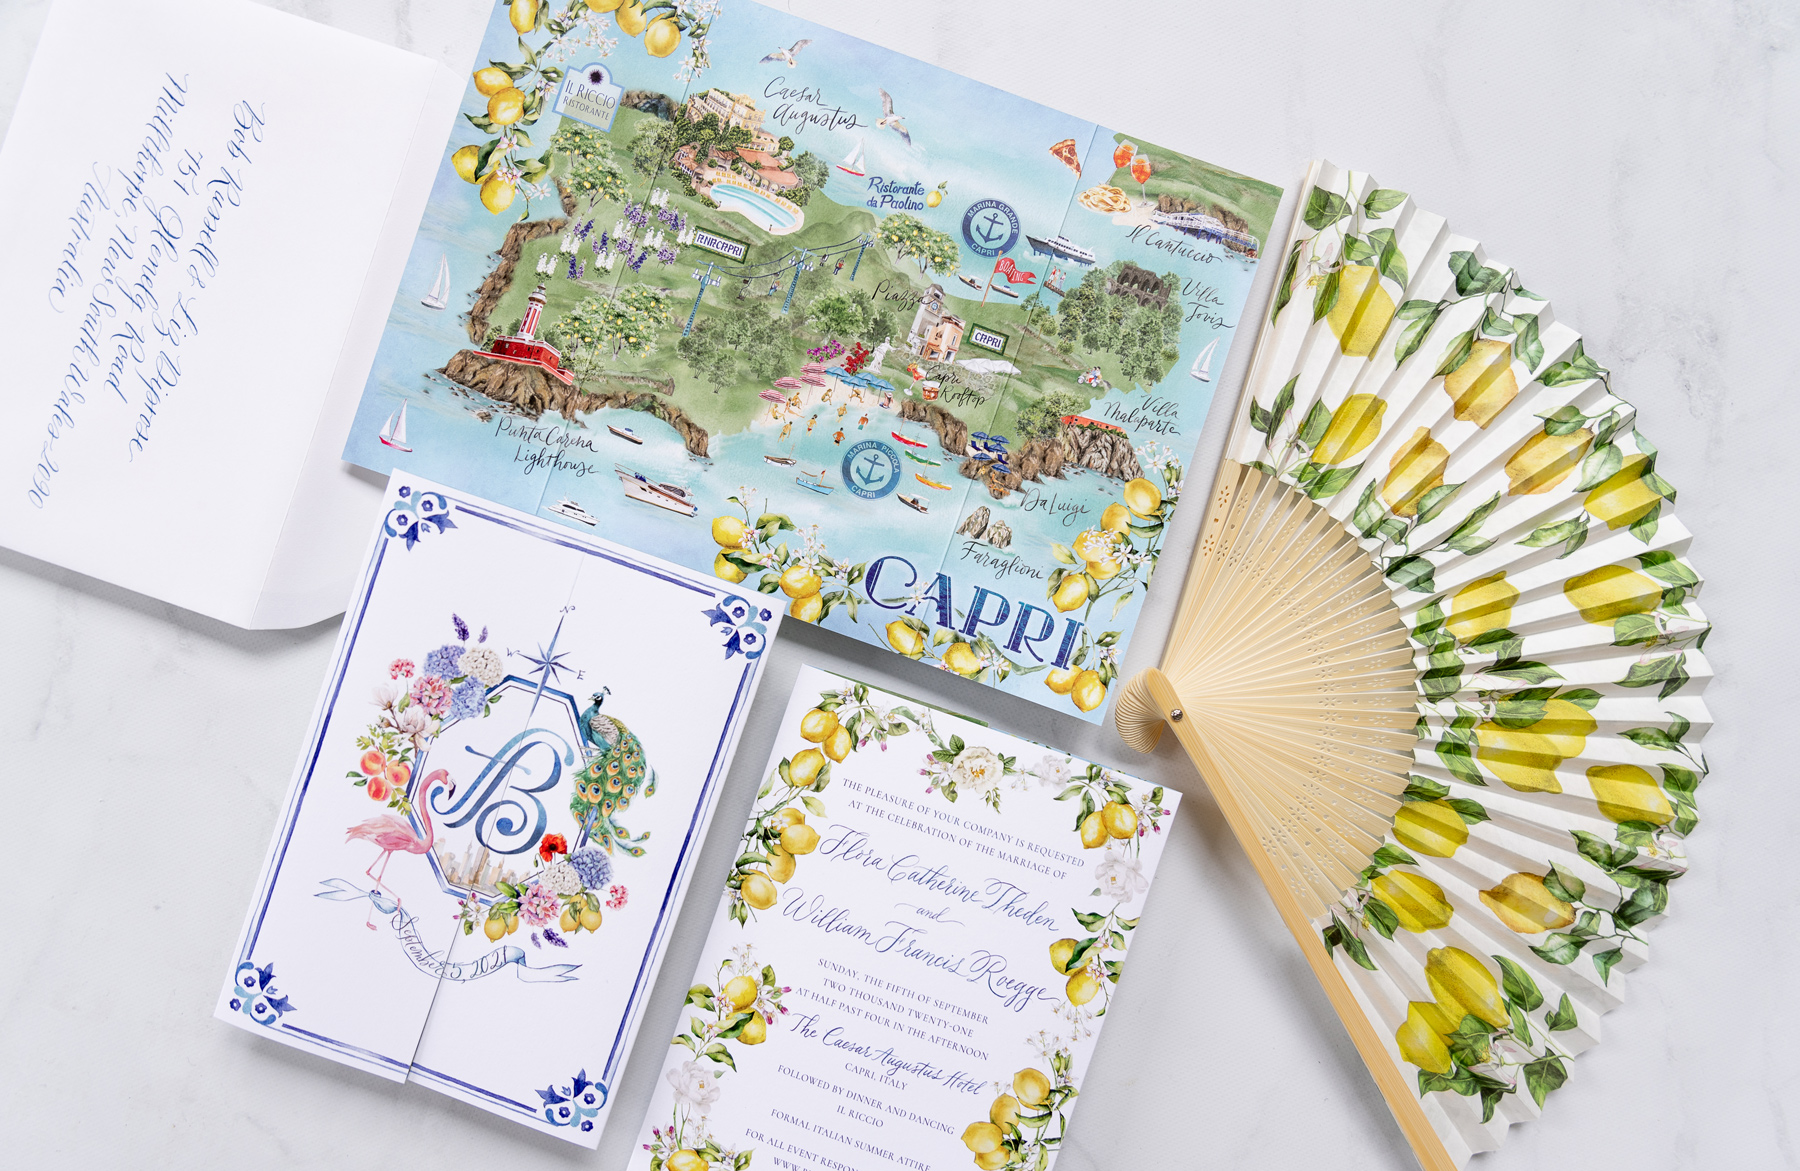 Capri wedding invitations by Lemontree Paper Co